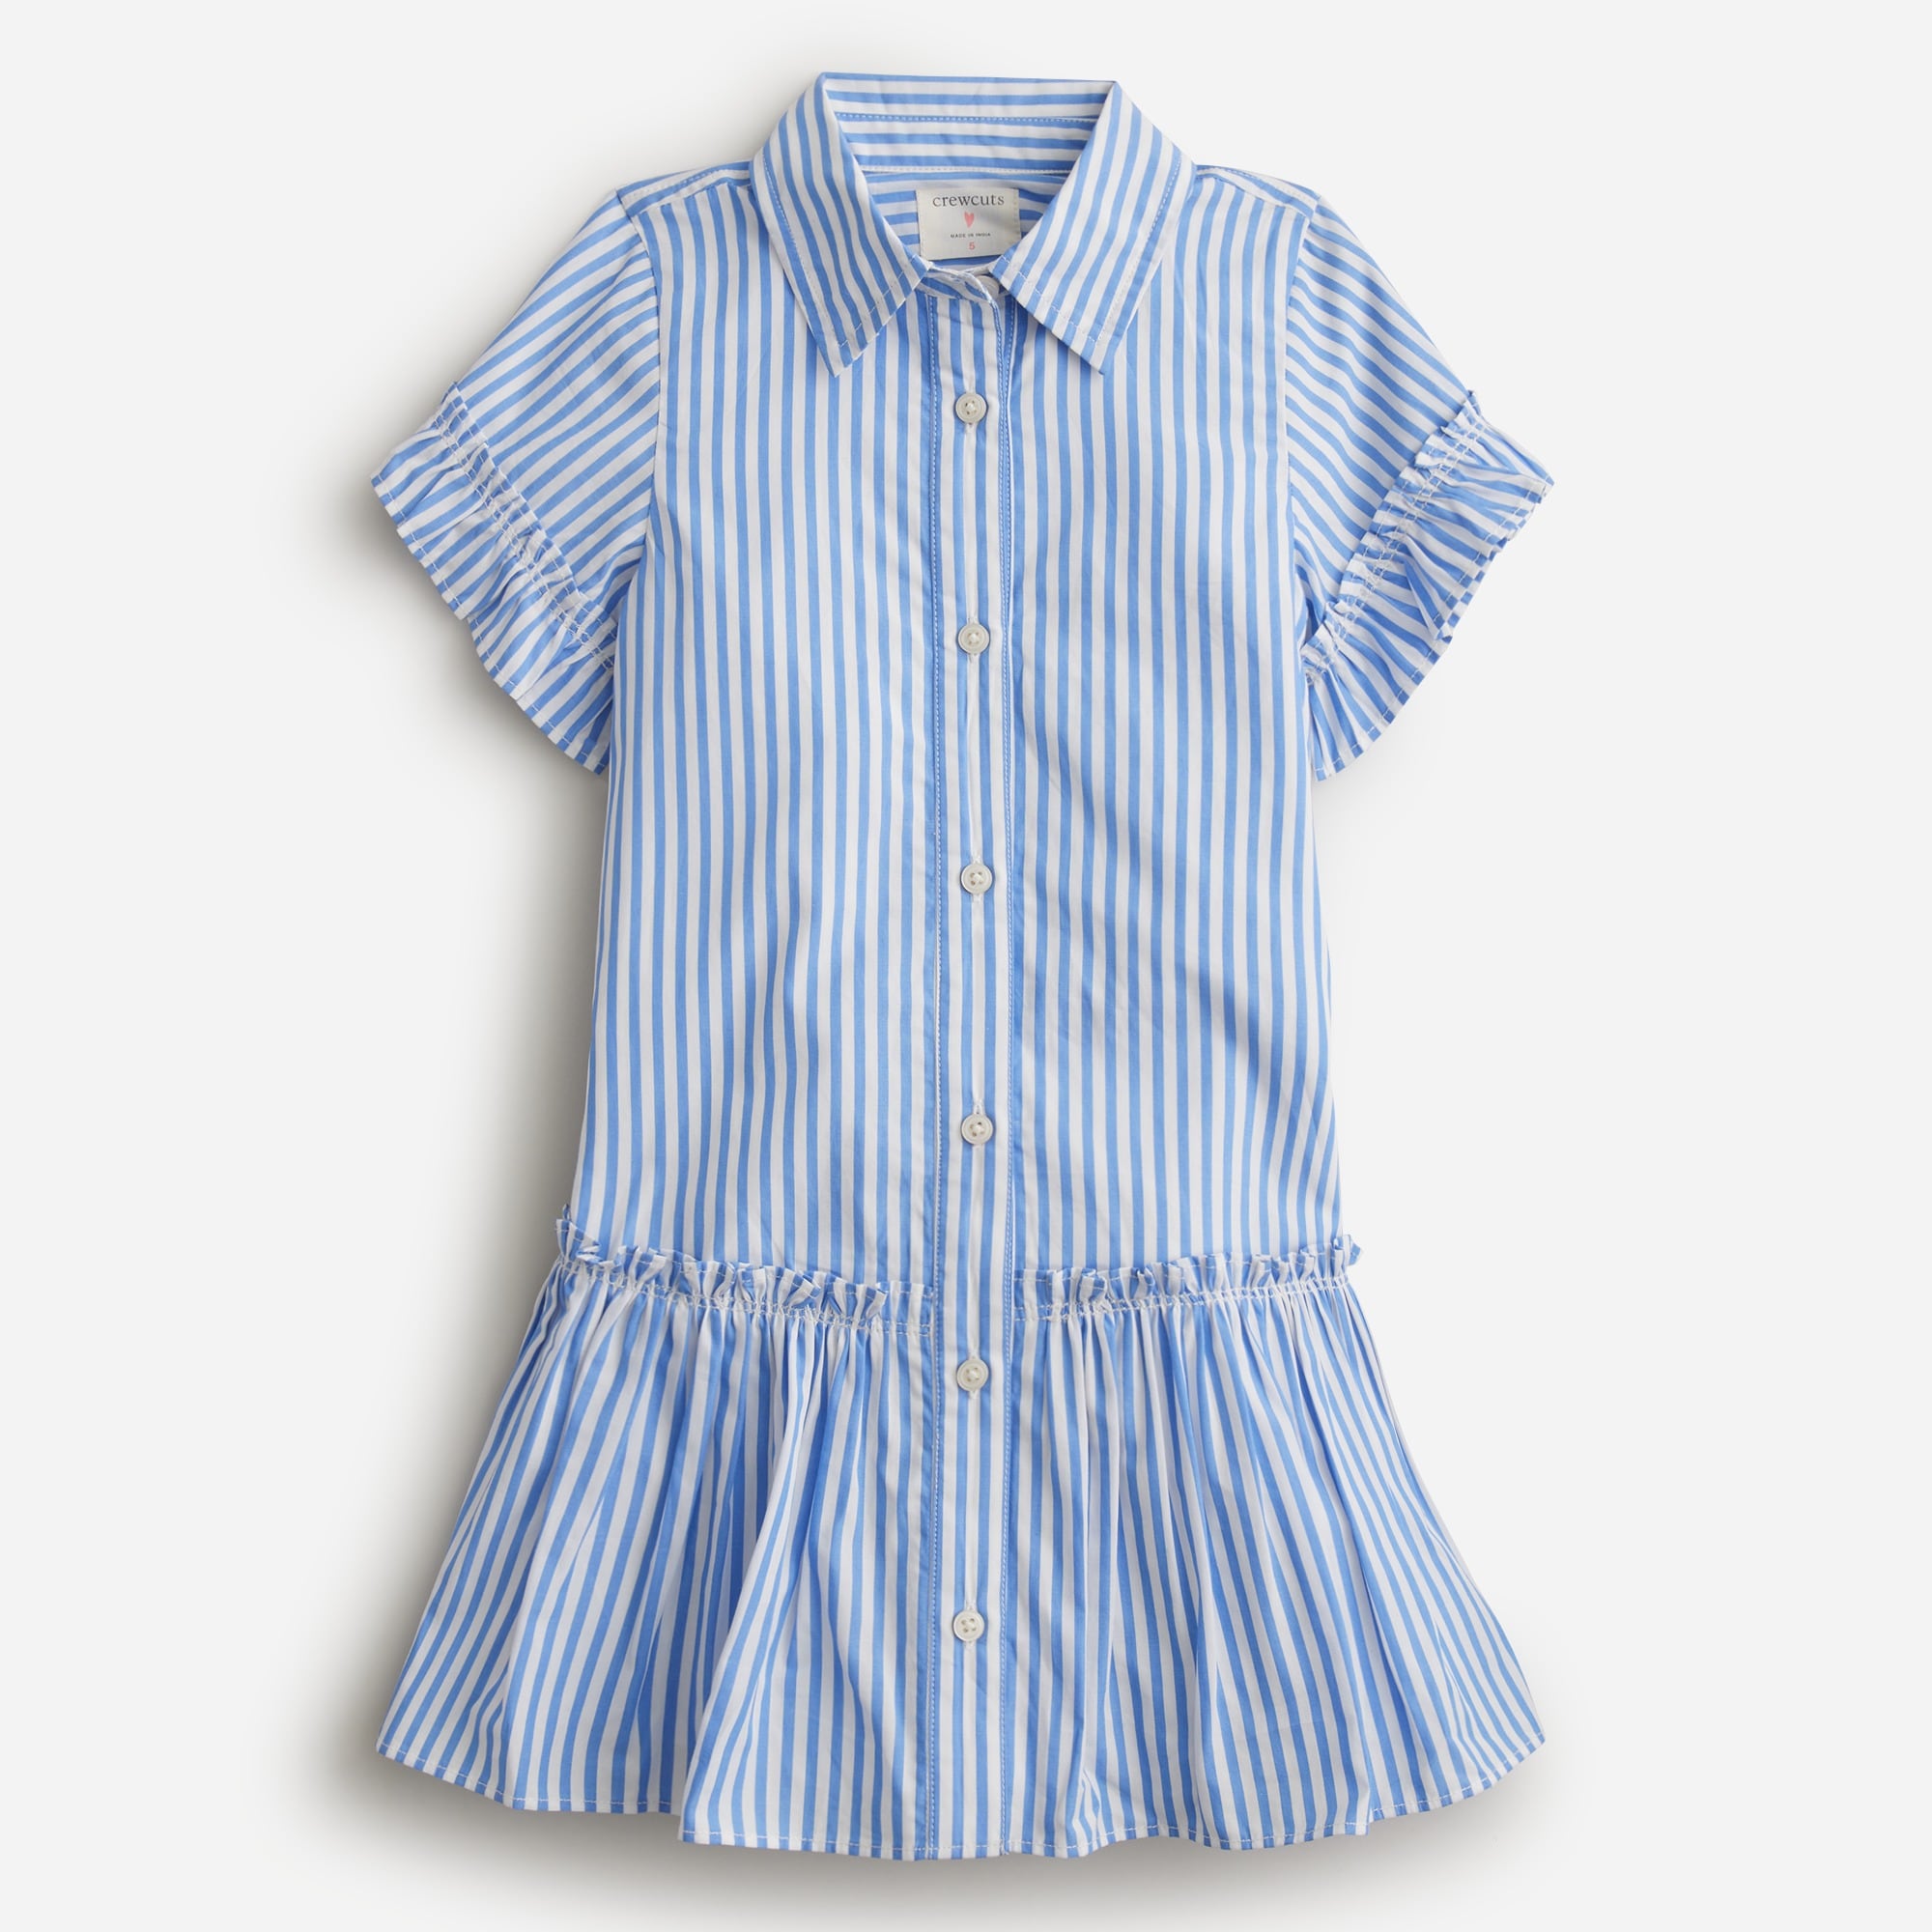  Girls' Amelia shirtdress in cotton poplin